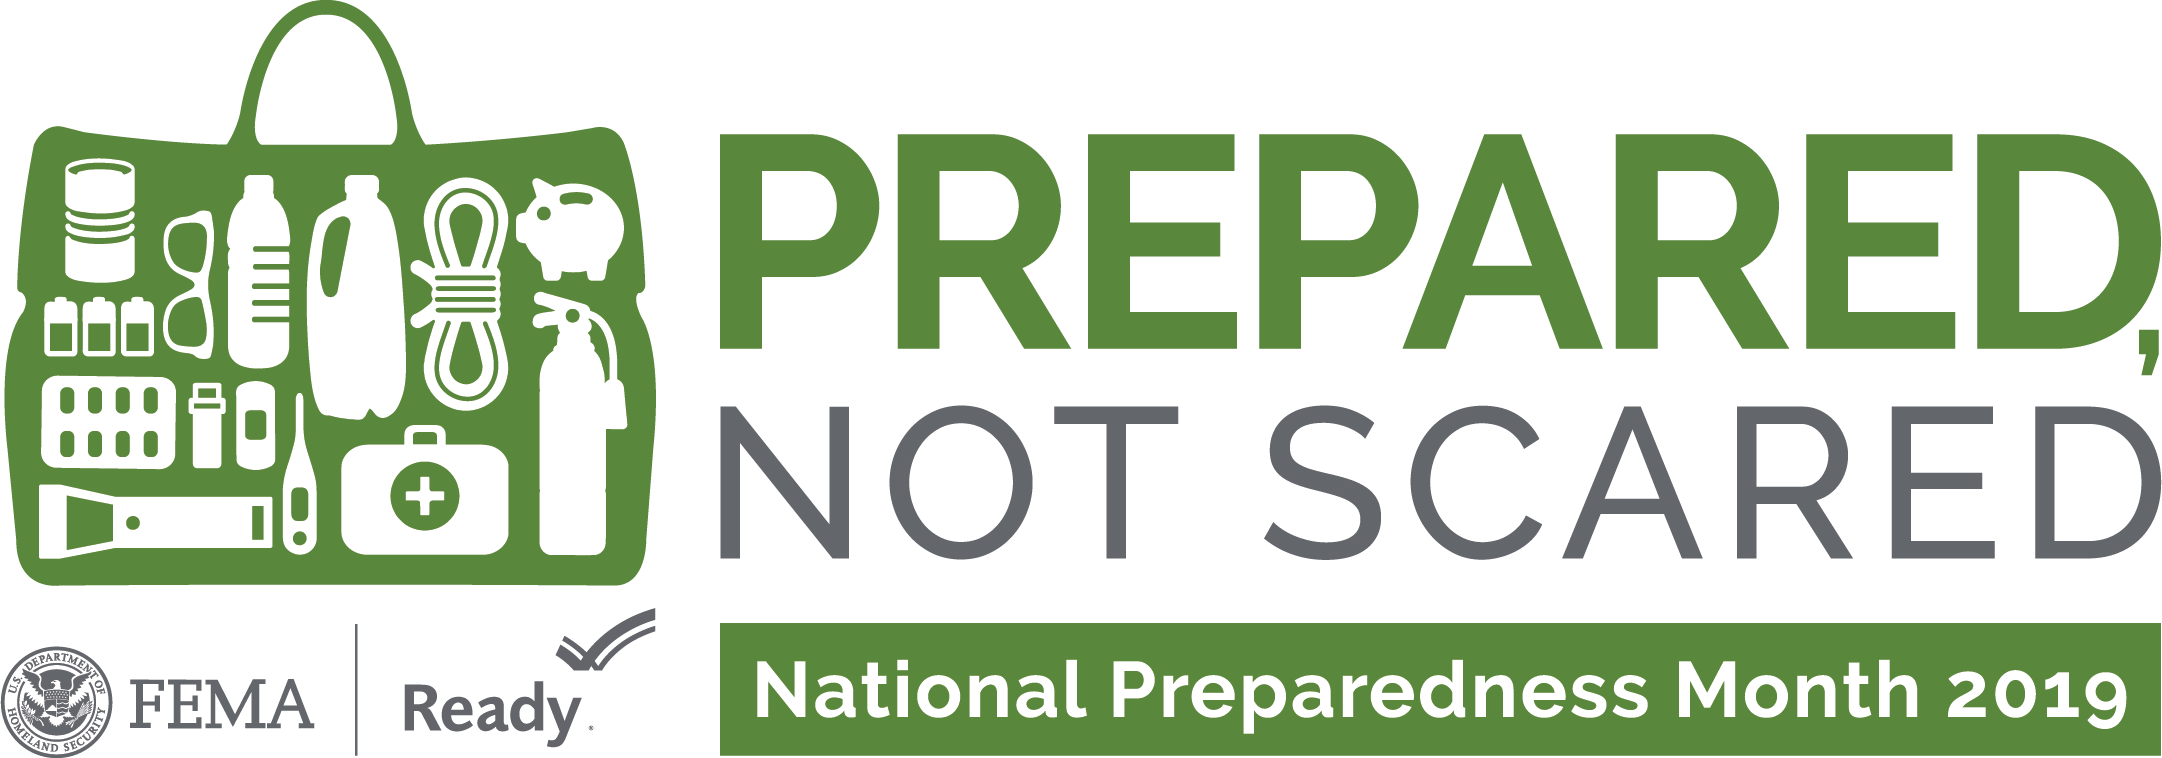 Preparedness month logo